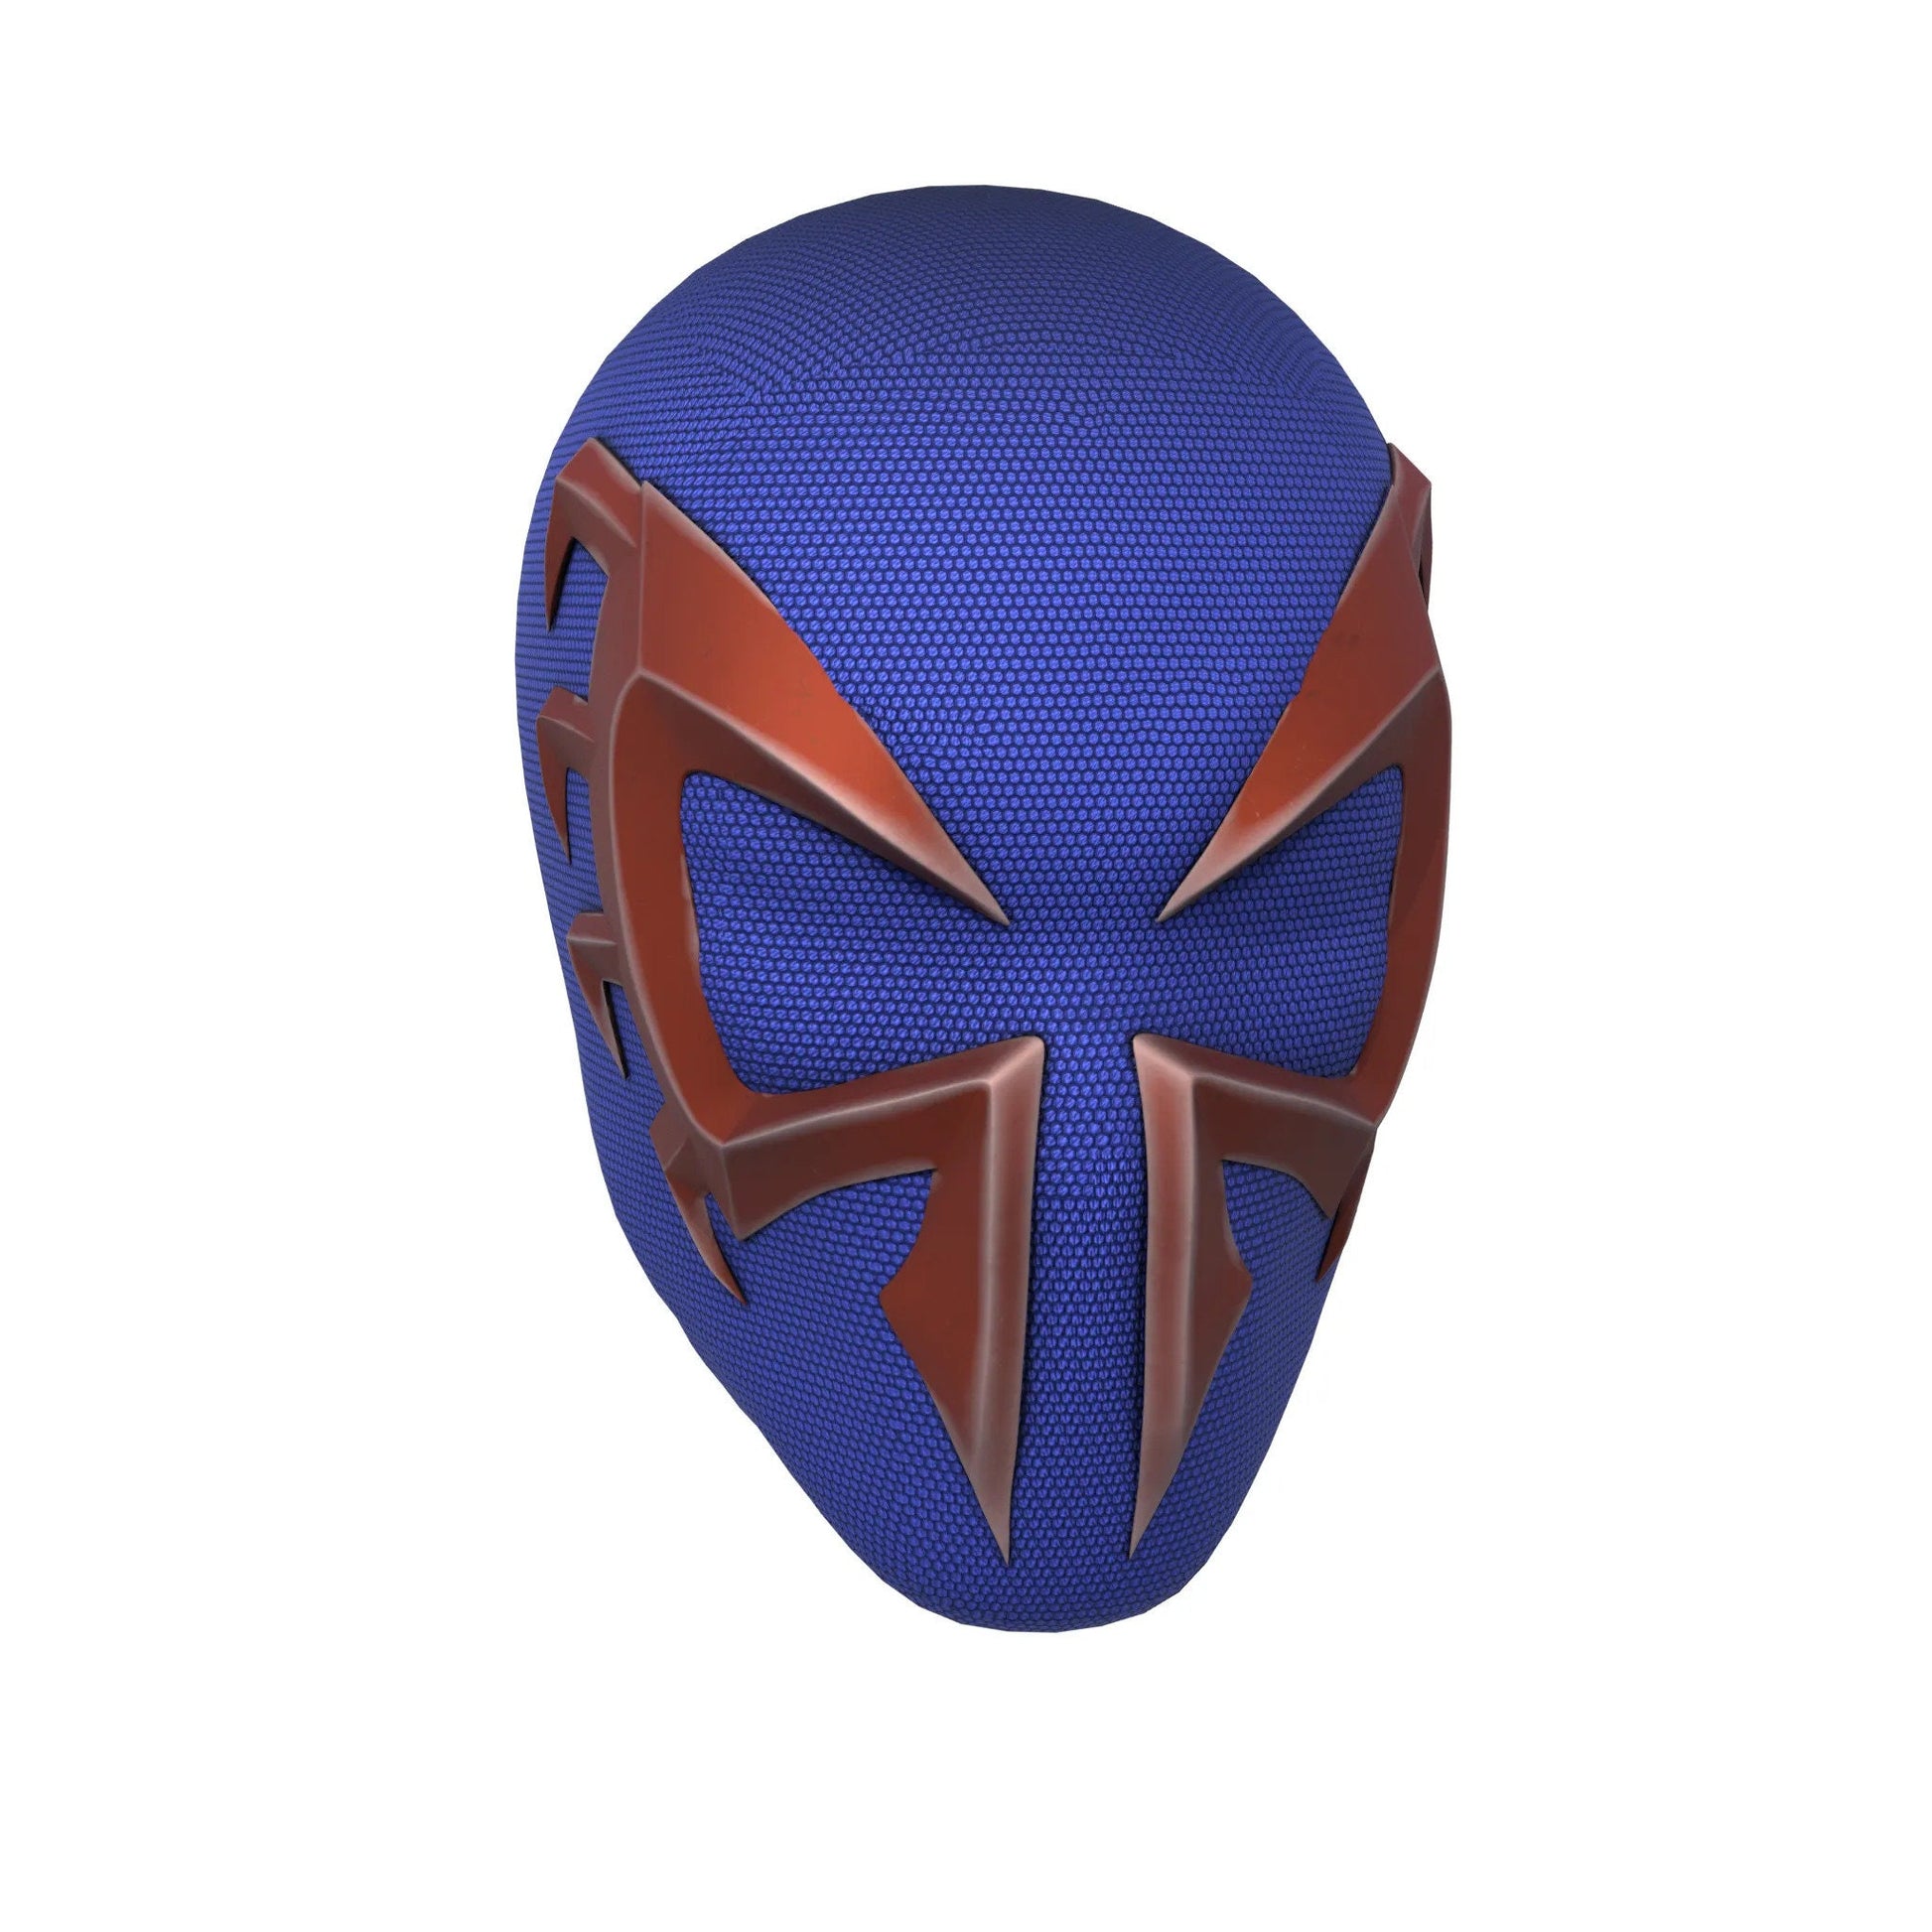 Spider man 2099 Cosplay Helmet